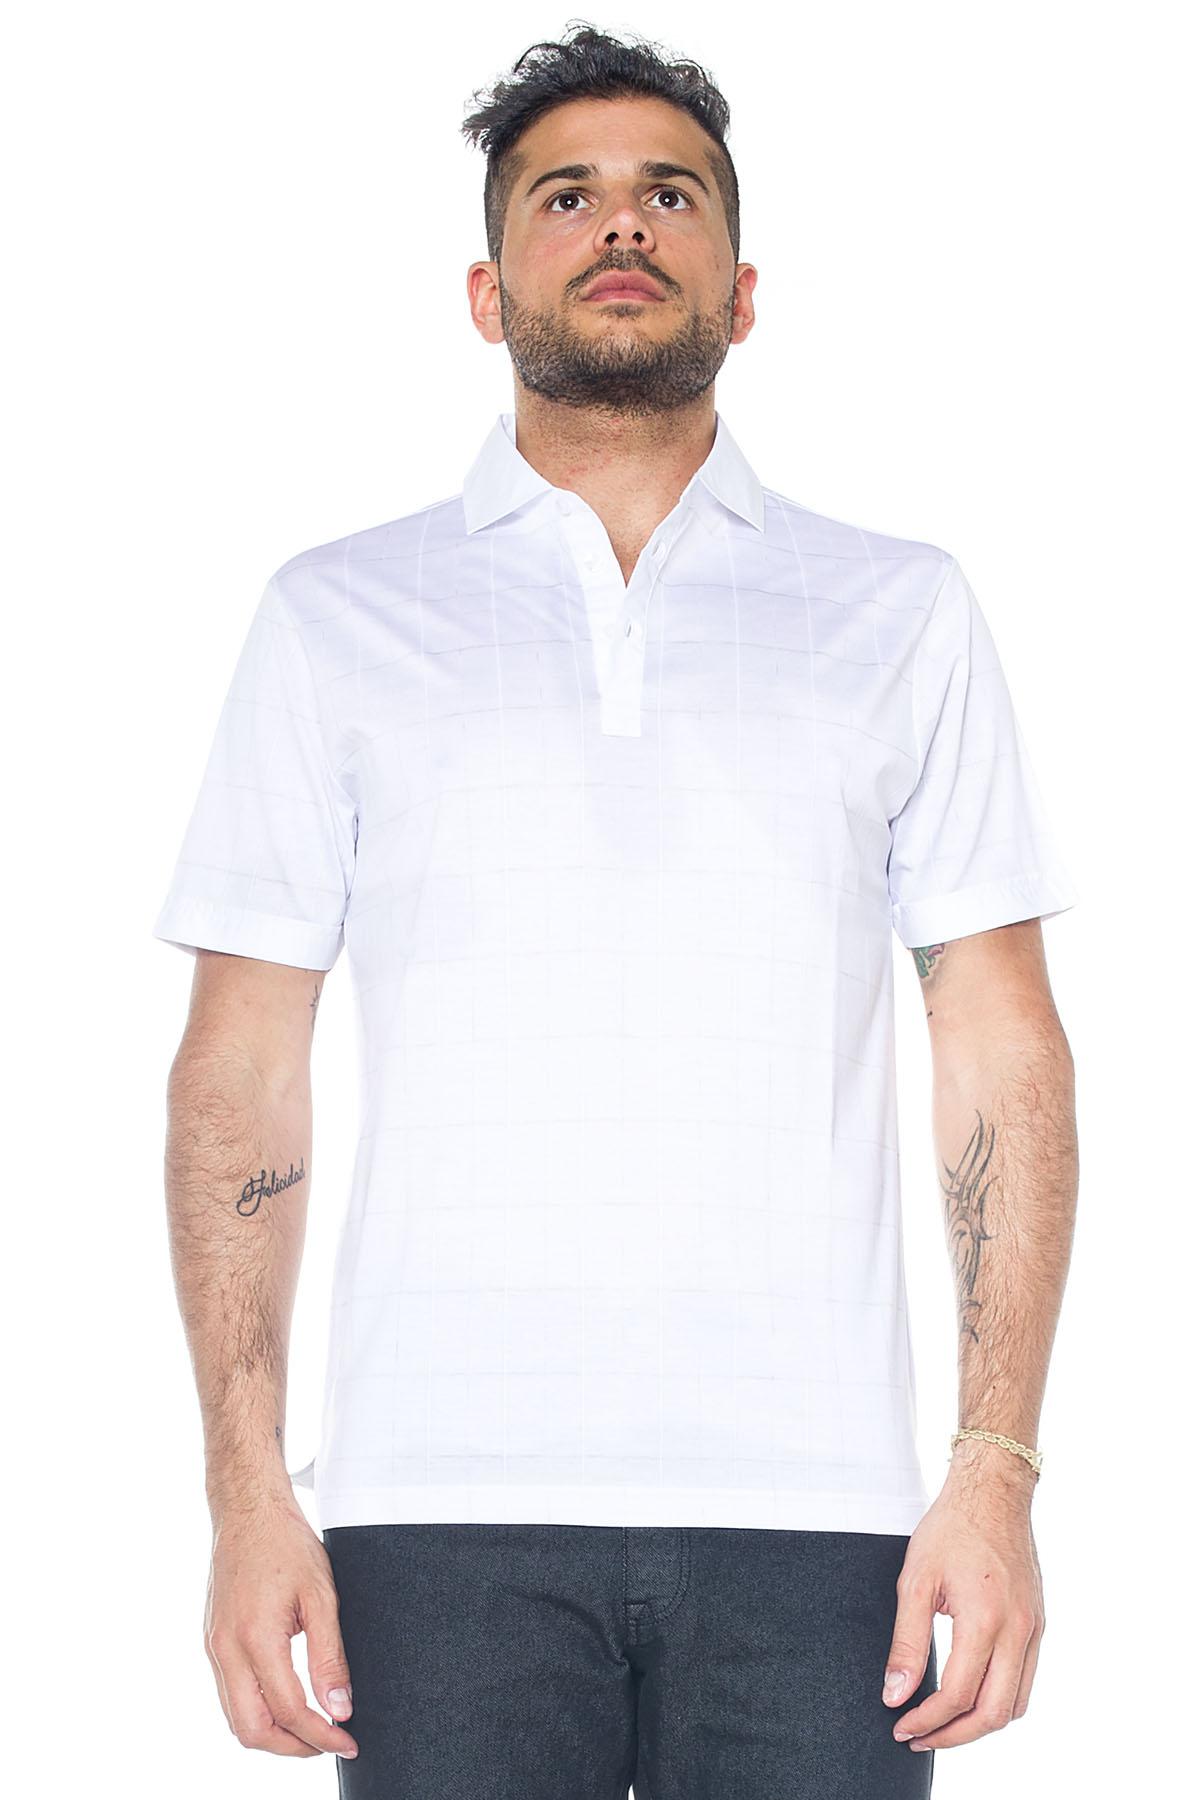 Lyst - Andrea Fenzi Short Sleeve Polo Shirt in White for Men - Save 6%